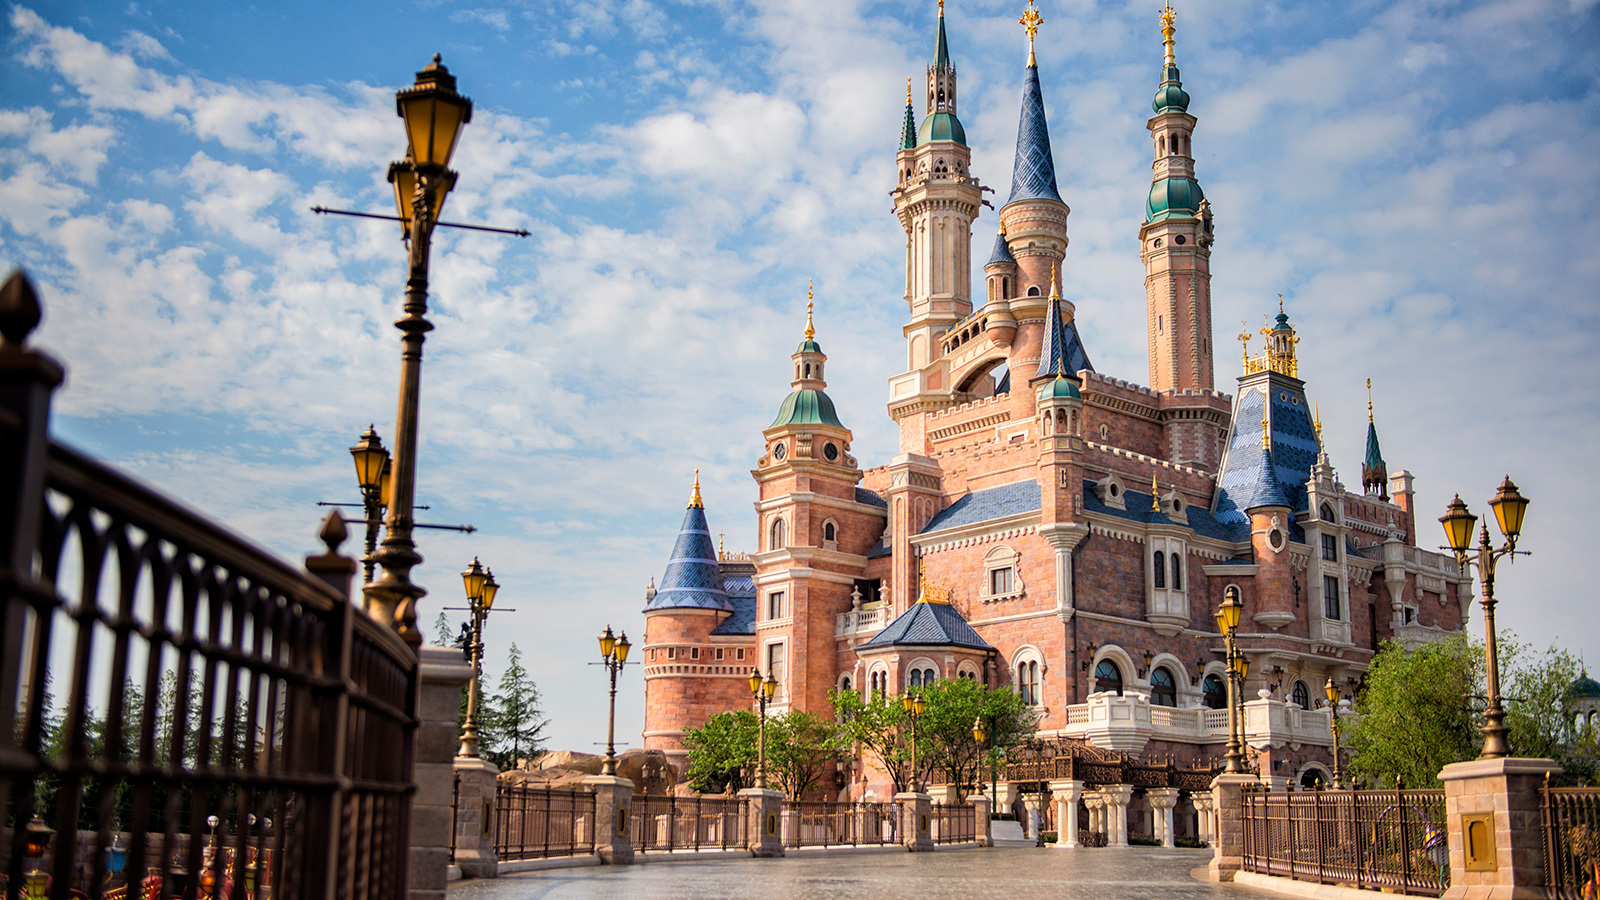 Shanghai Disney Resort Presents the Disney Magical Film Festival at the Walt Disney Grand Theatre